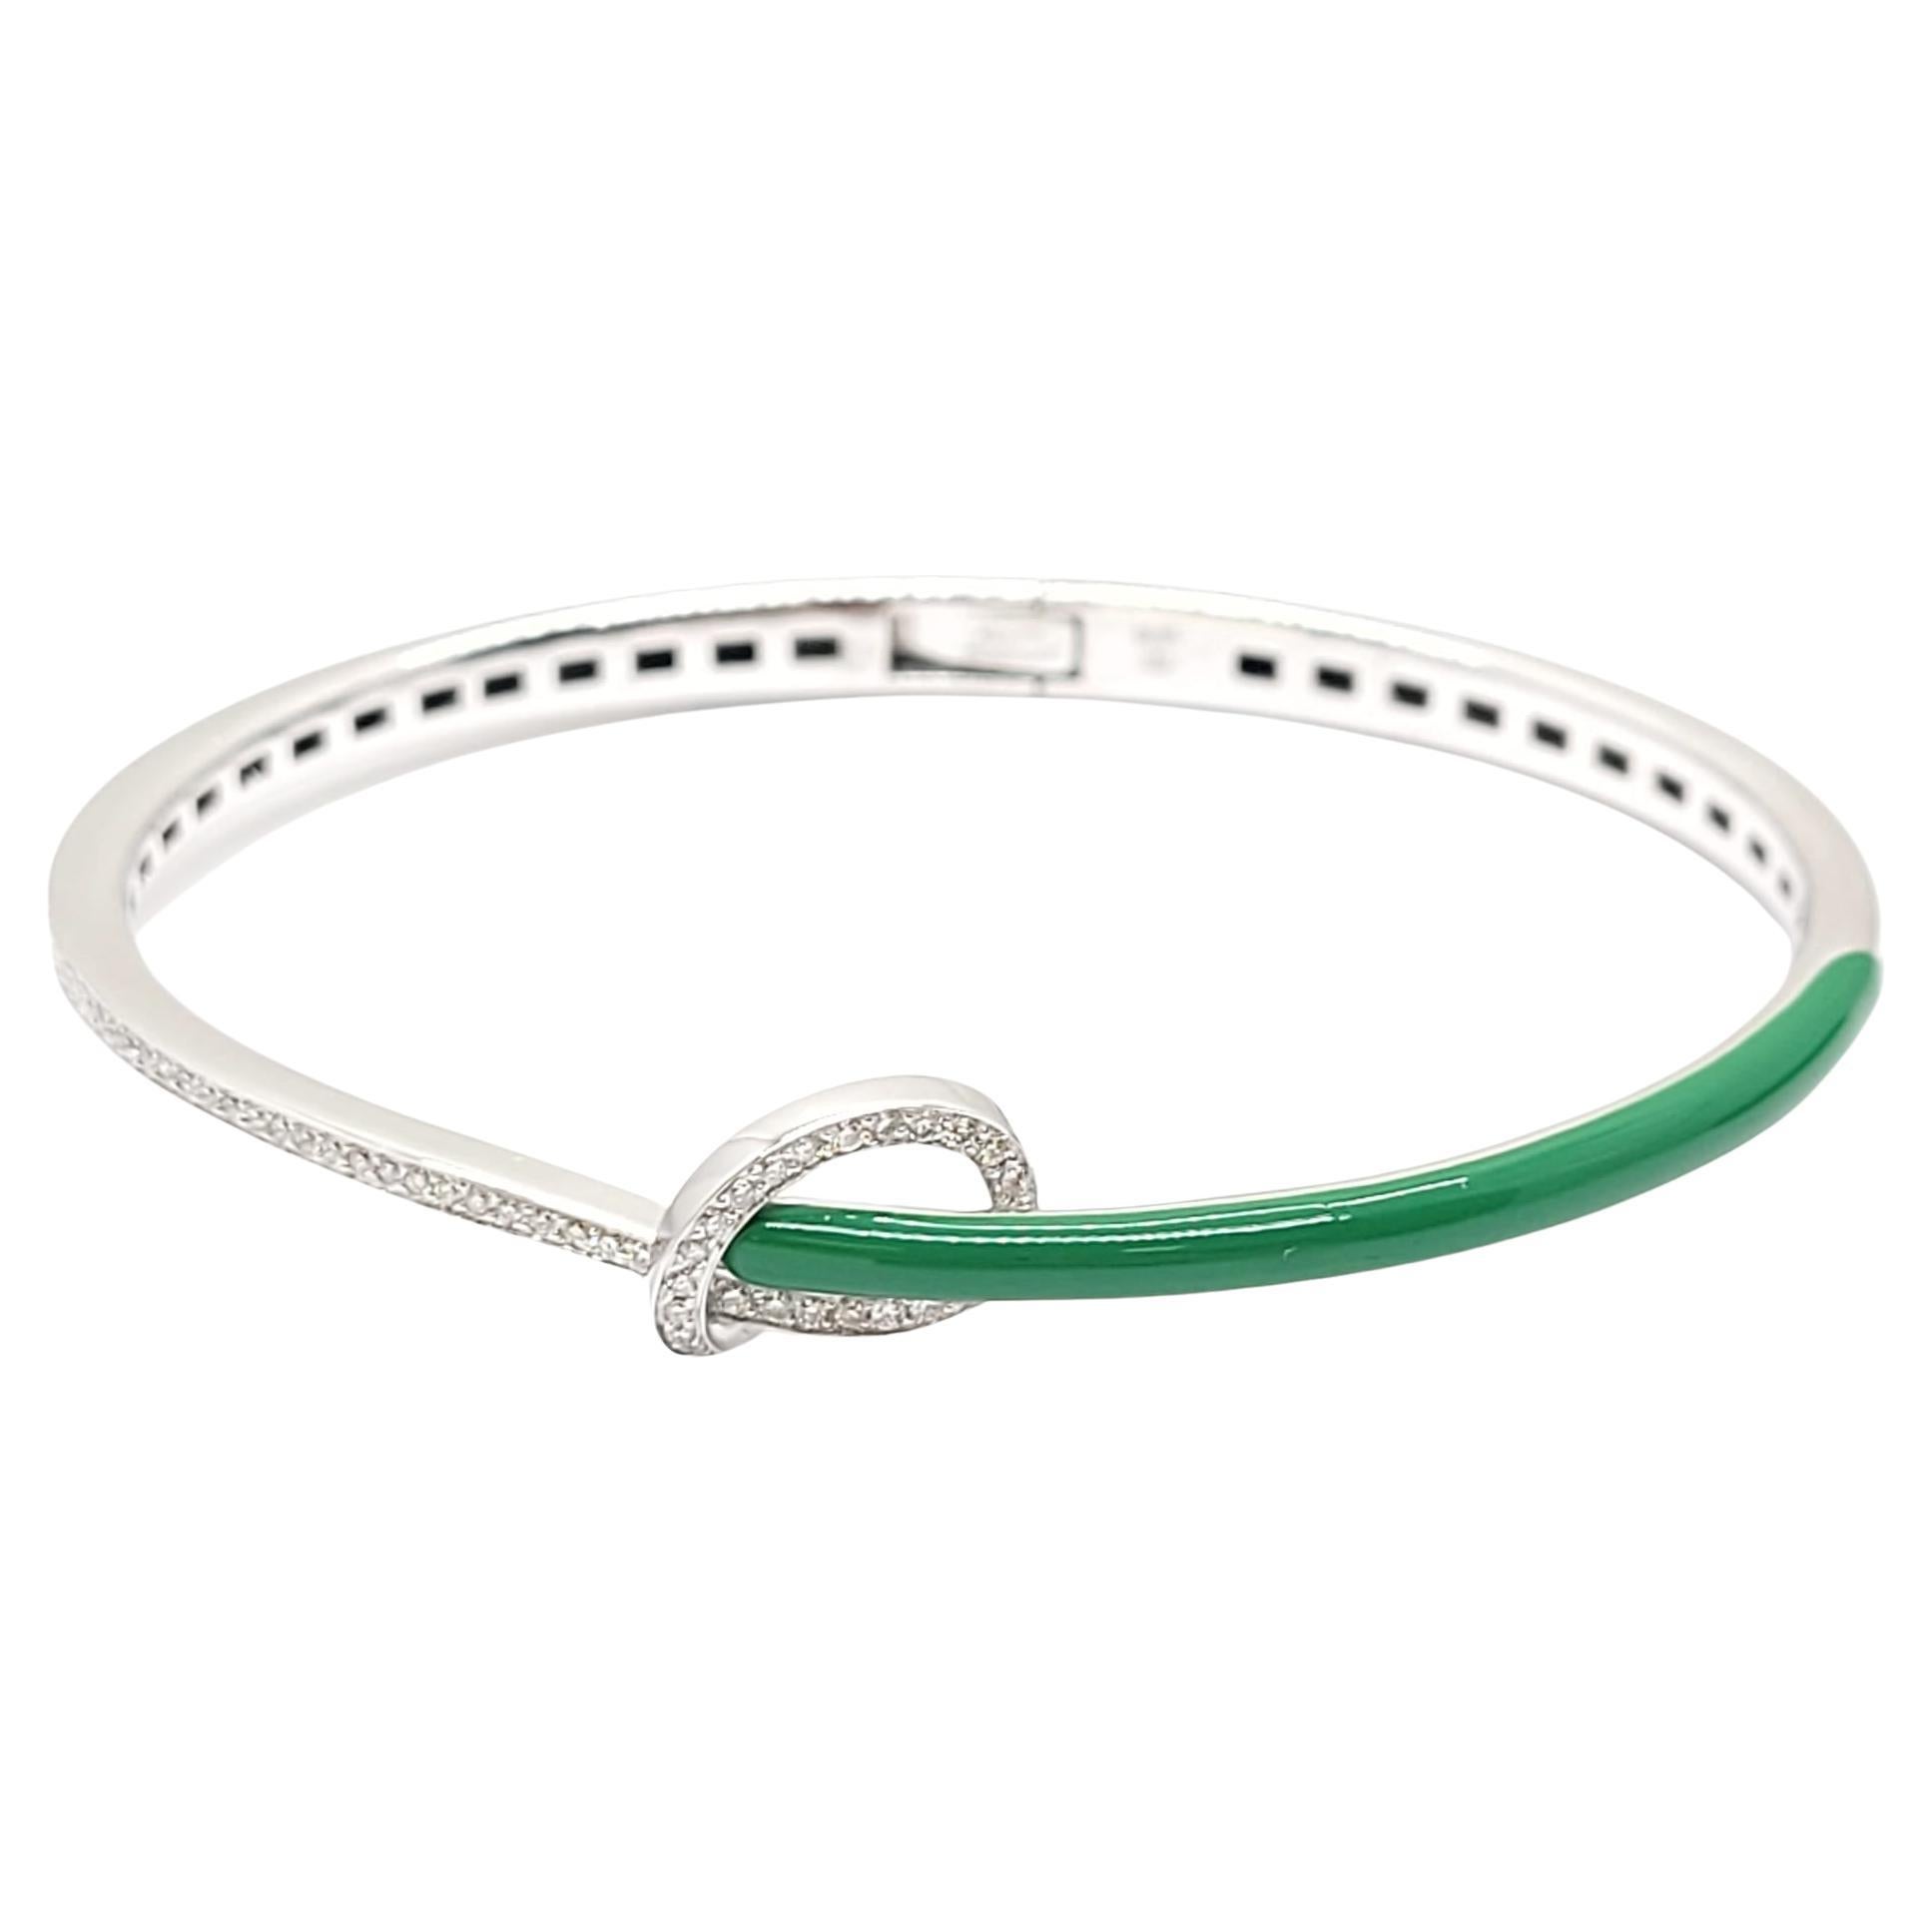 Andreoli - Bracelet en or blanc 18 carats avec émail vert et diamants